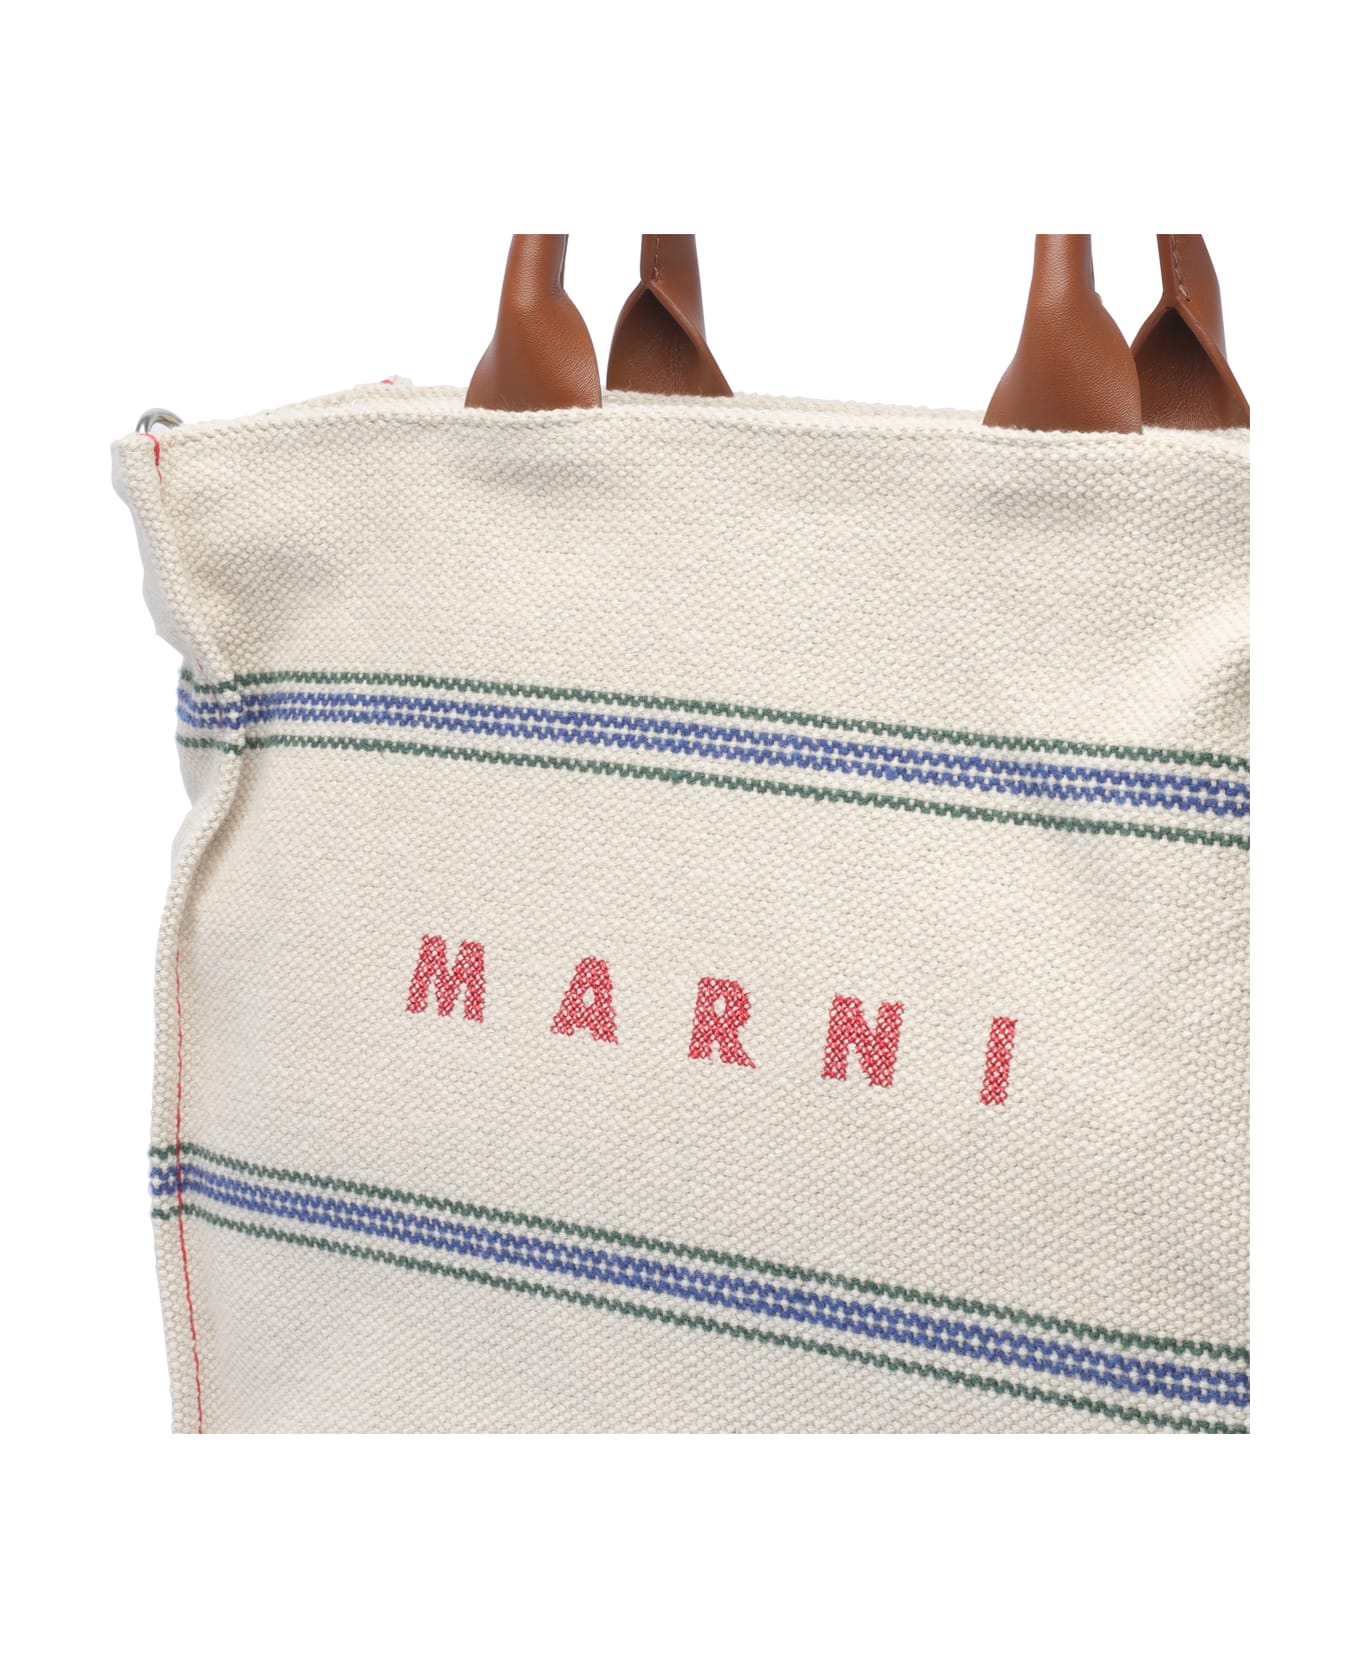 Marni Logo Shopping Bag - Beige